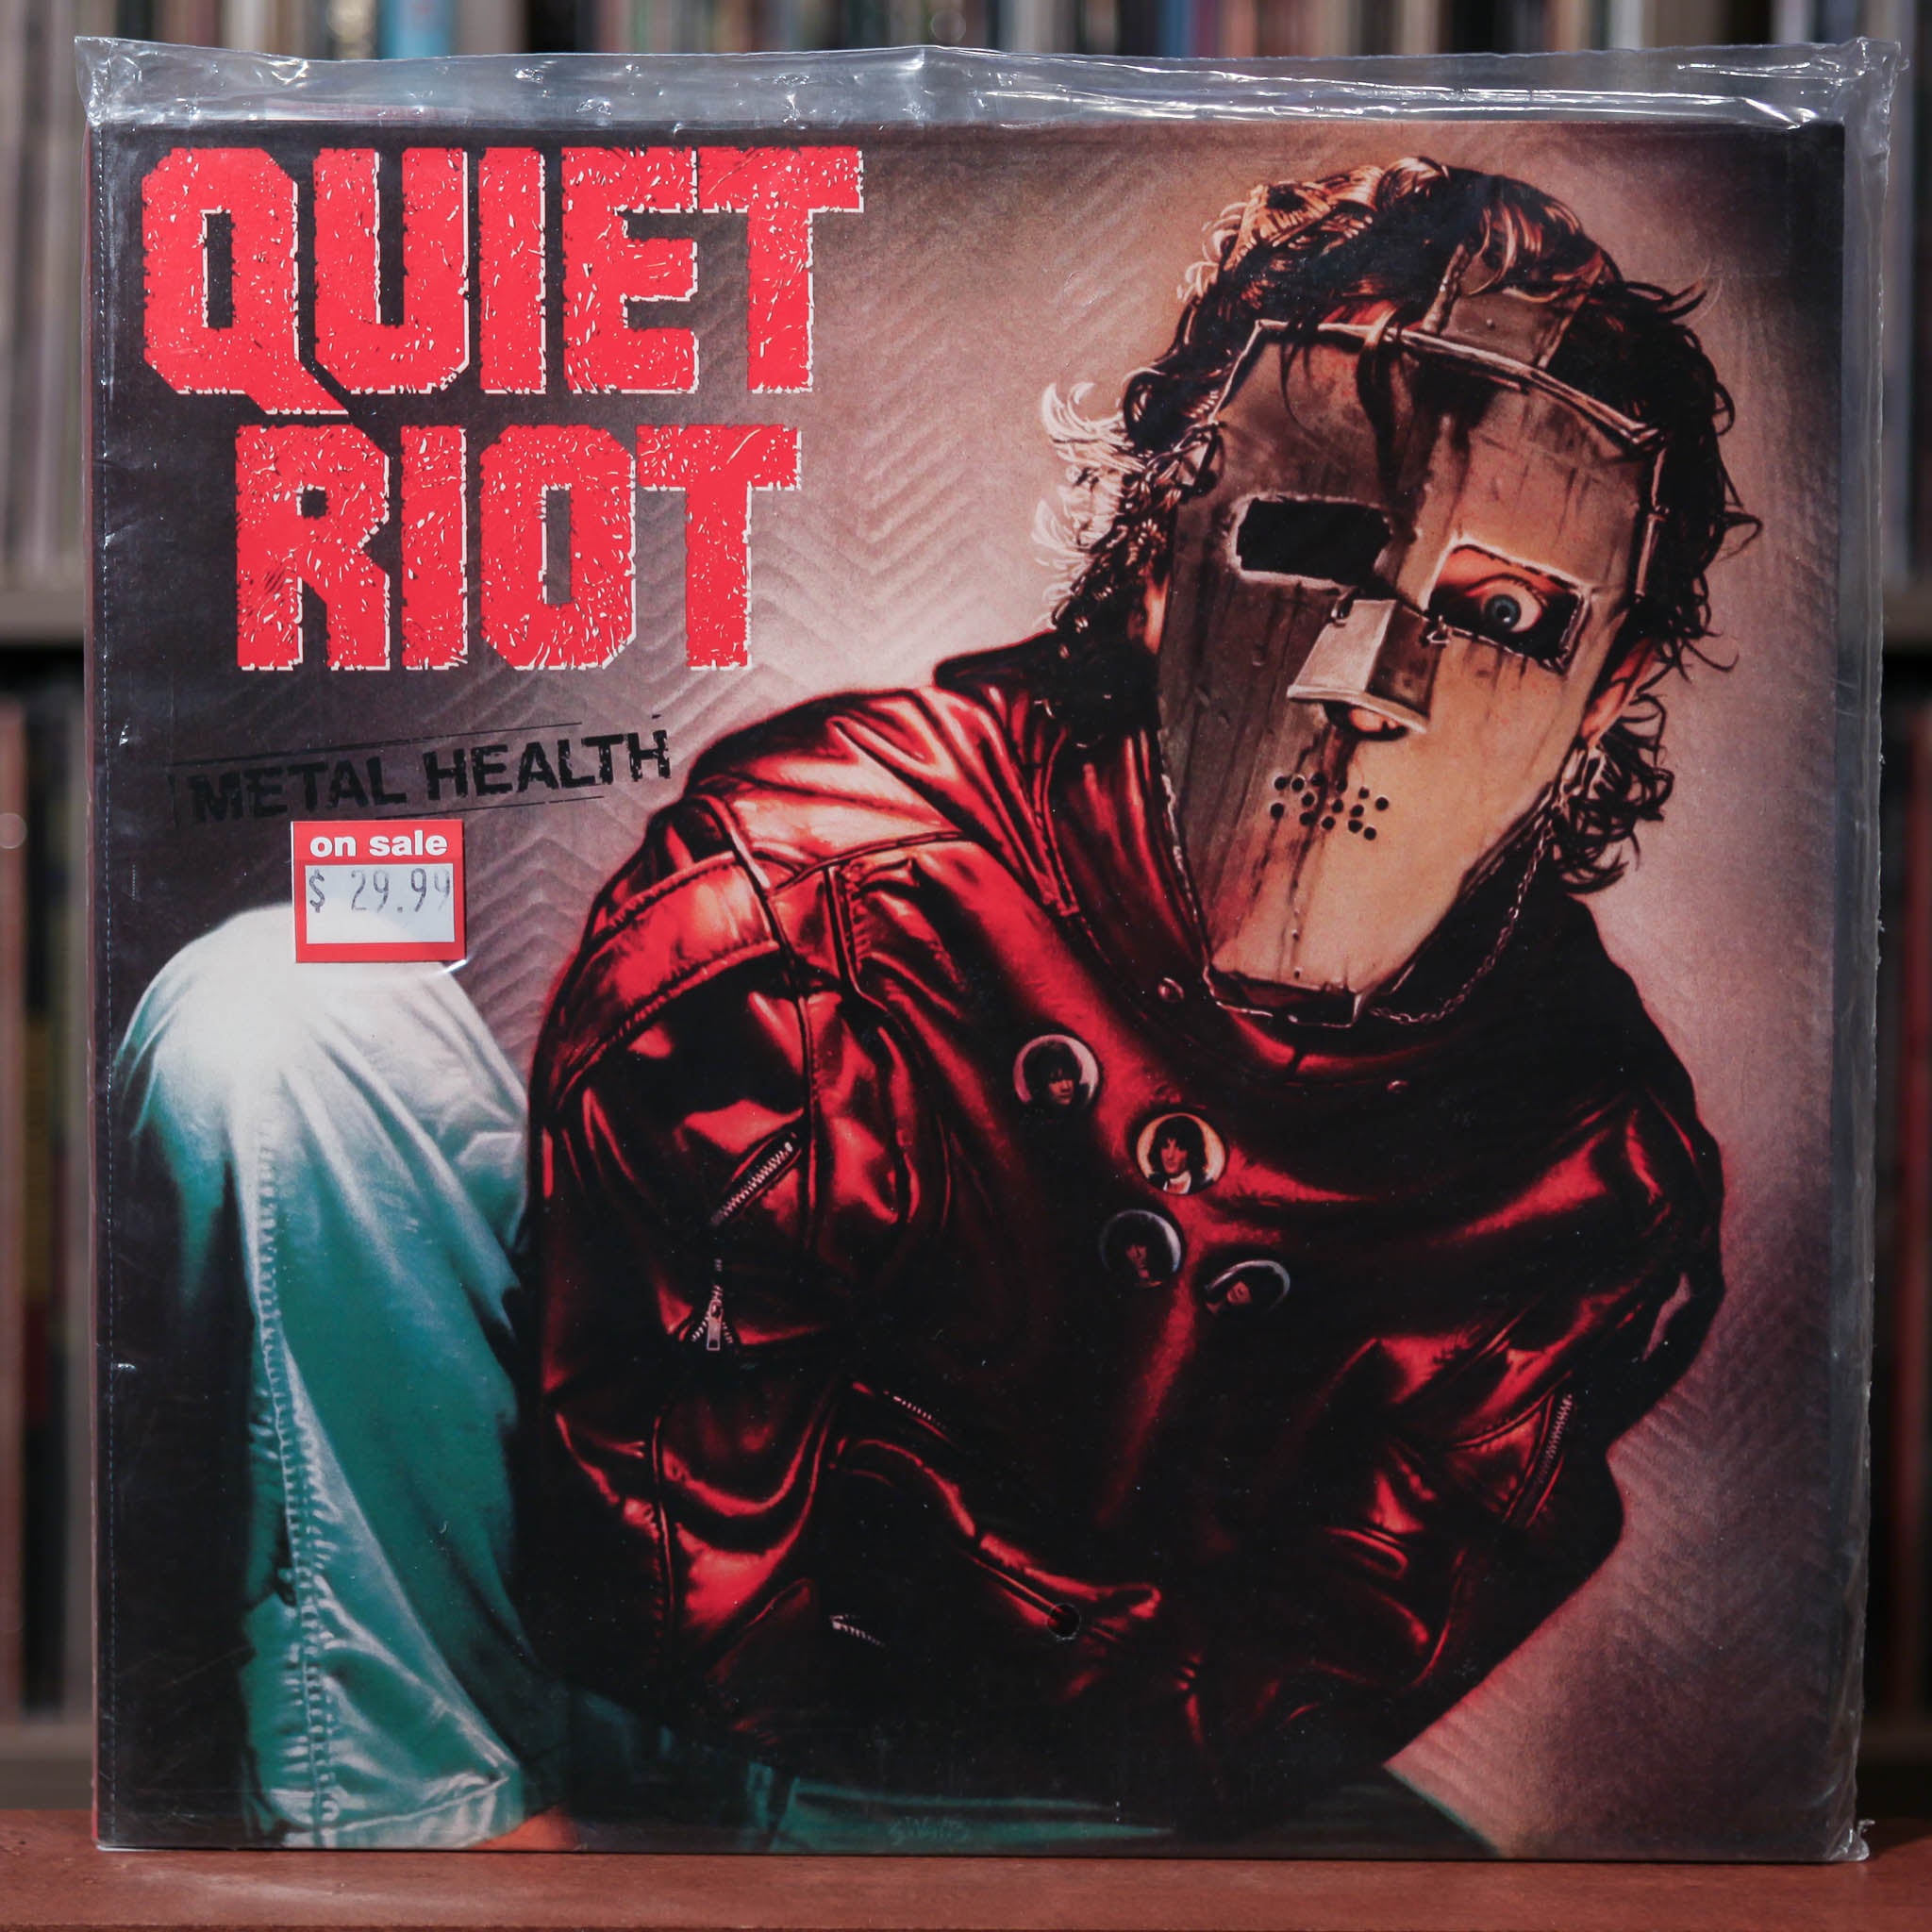 Quiet Riot - Mental Health - 180g Red Vinyl - 2010 Friday Music